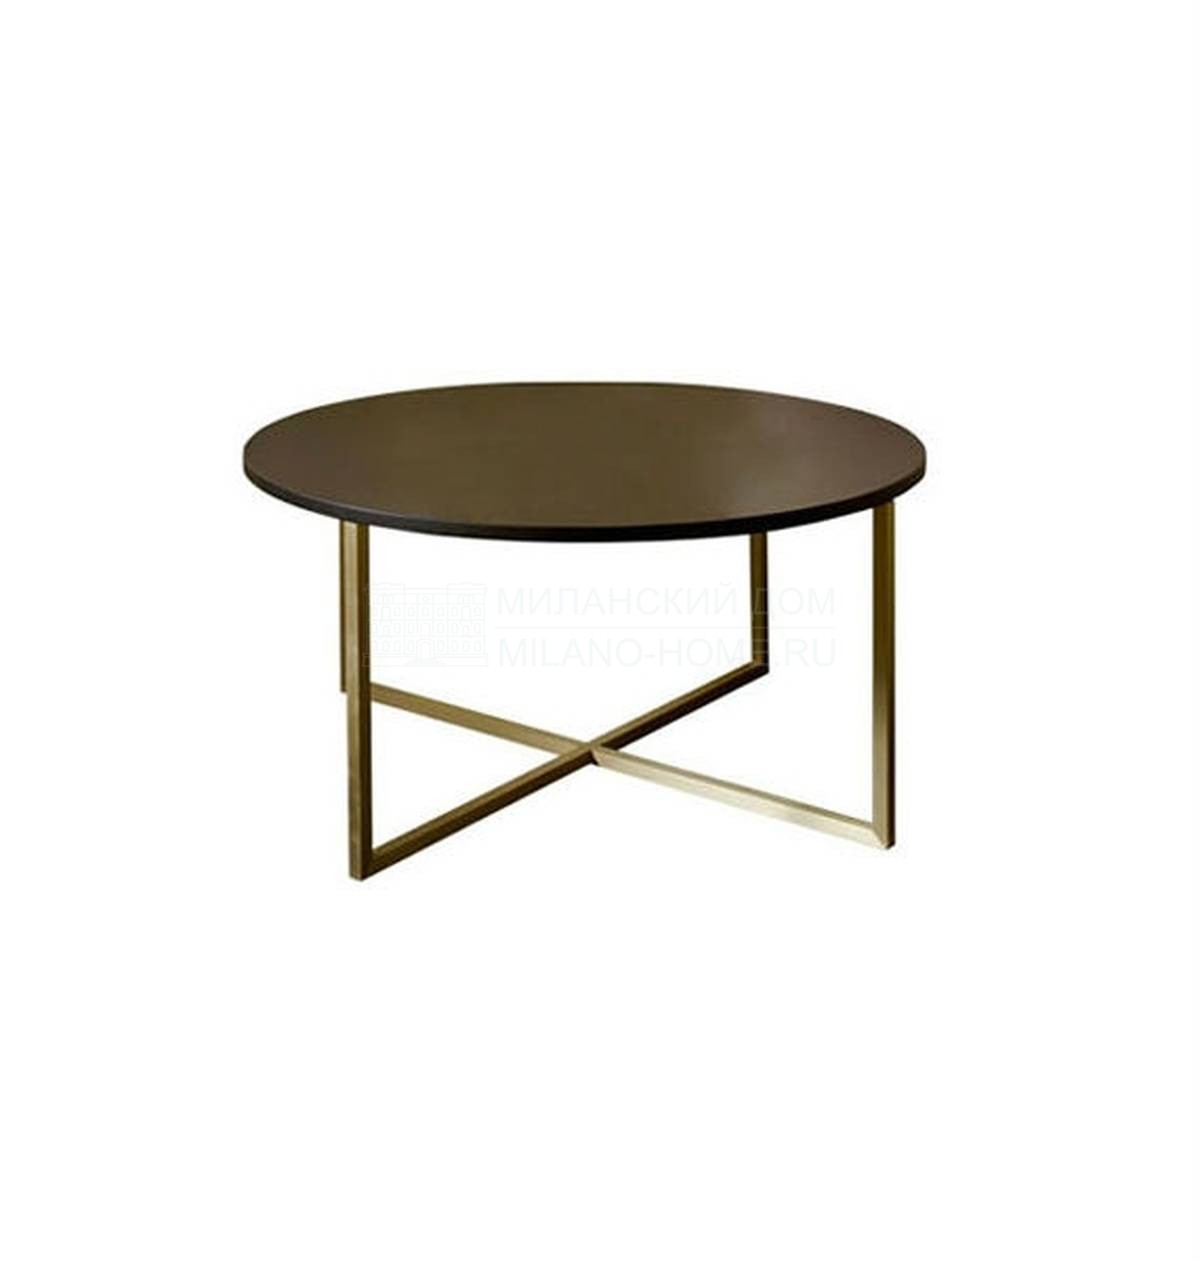 Кофейный столик Willy round table из Италии фабрики SOFTHOUSE